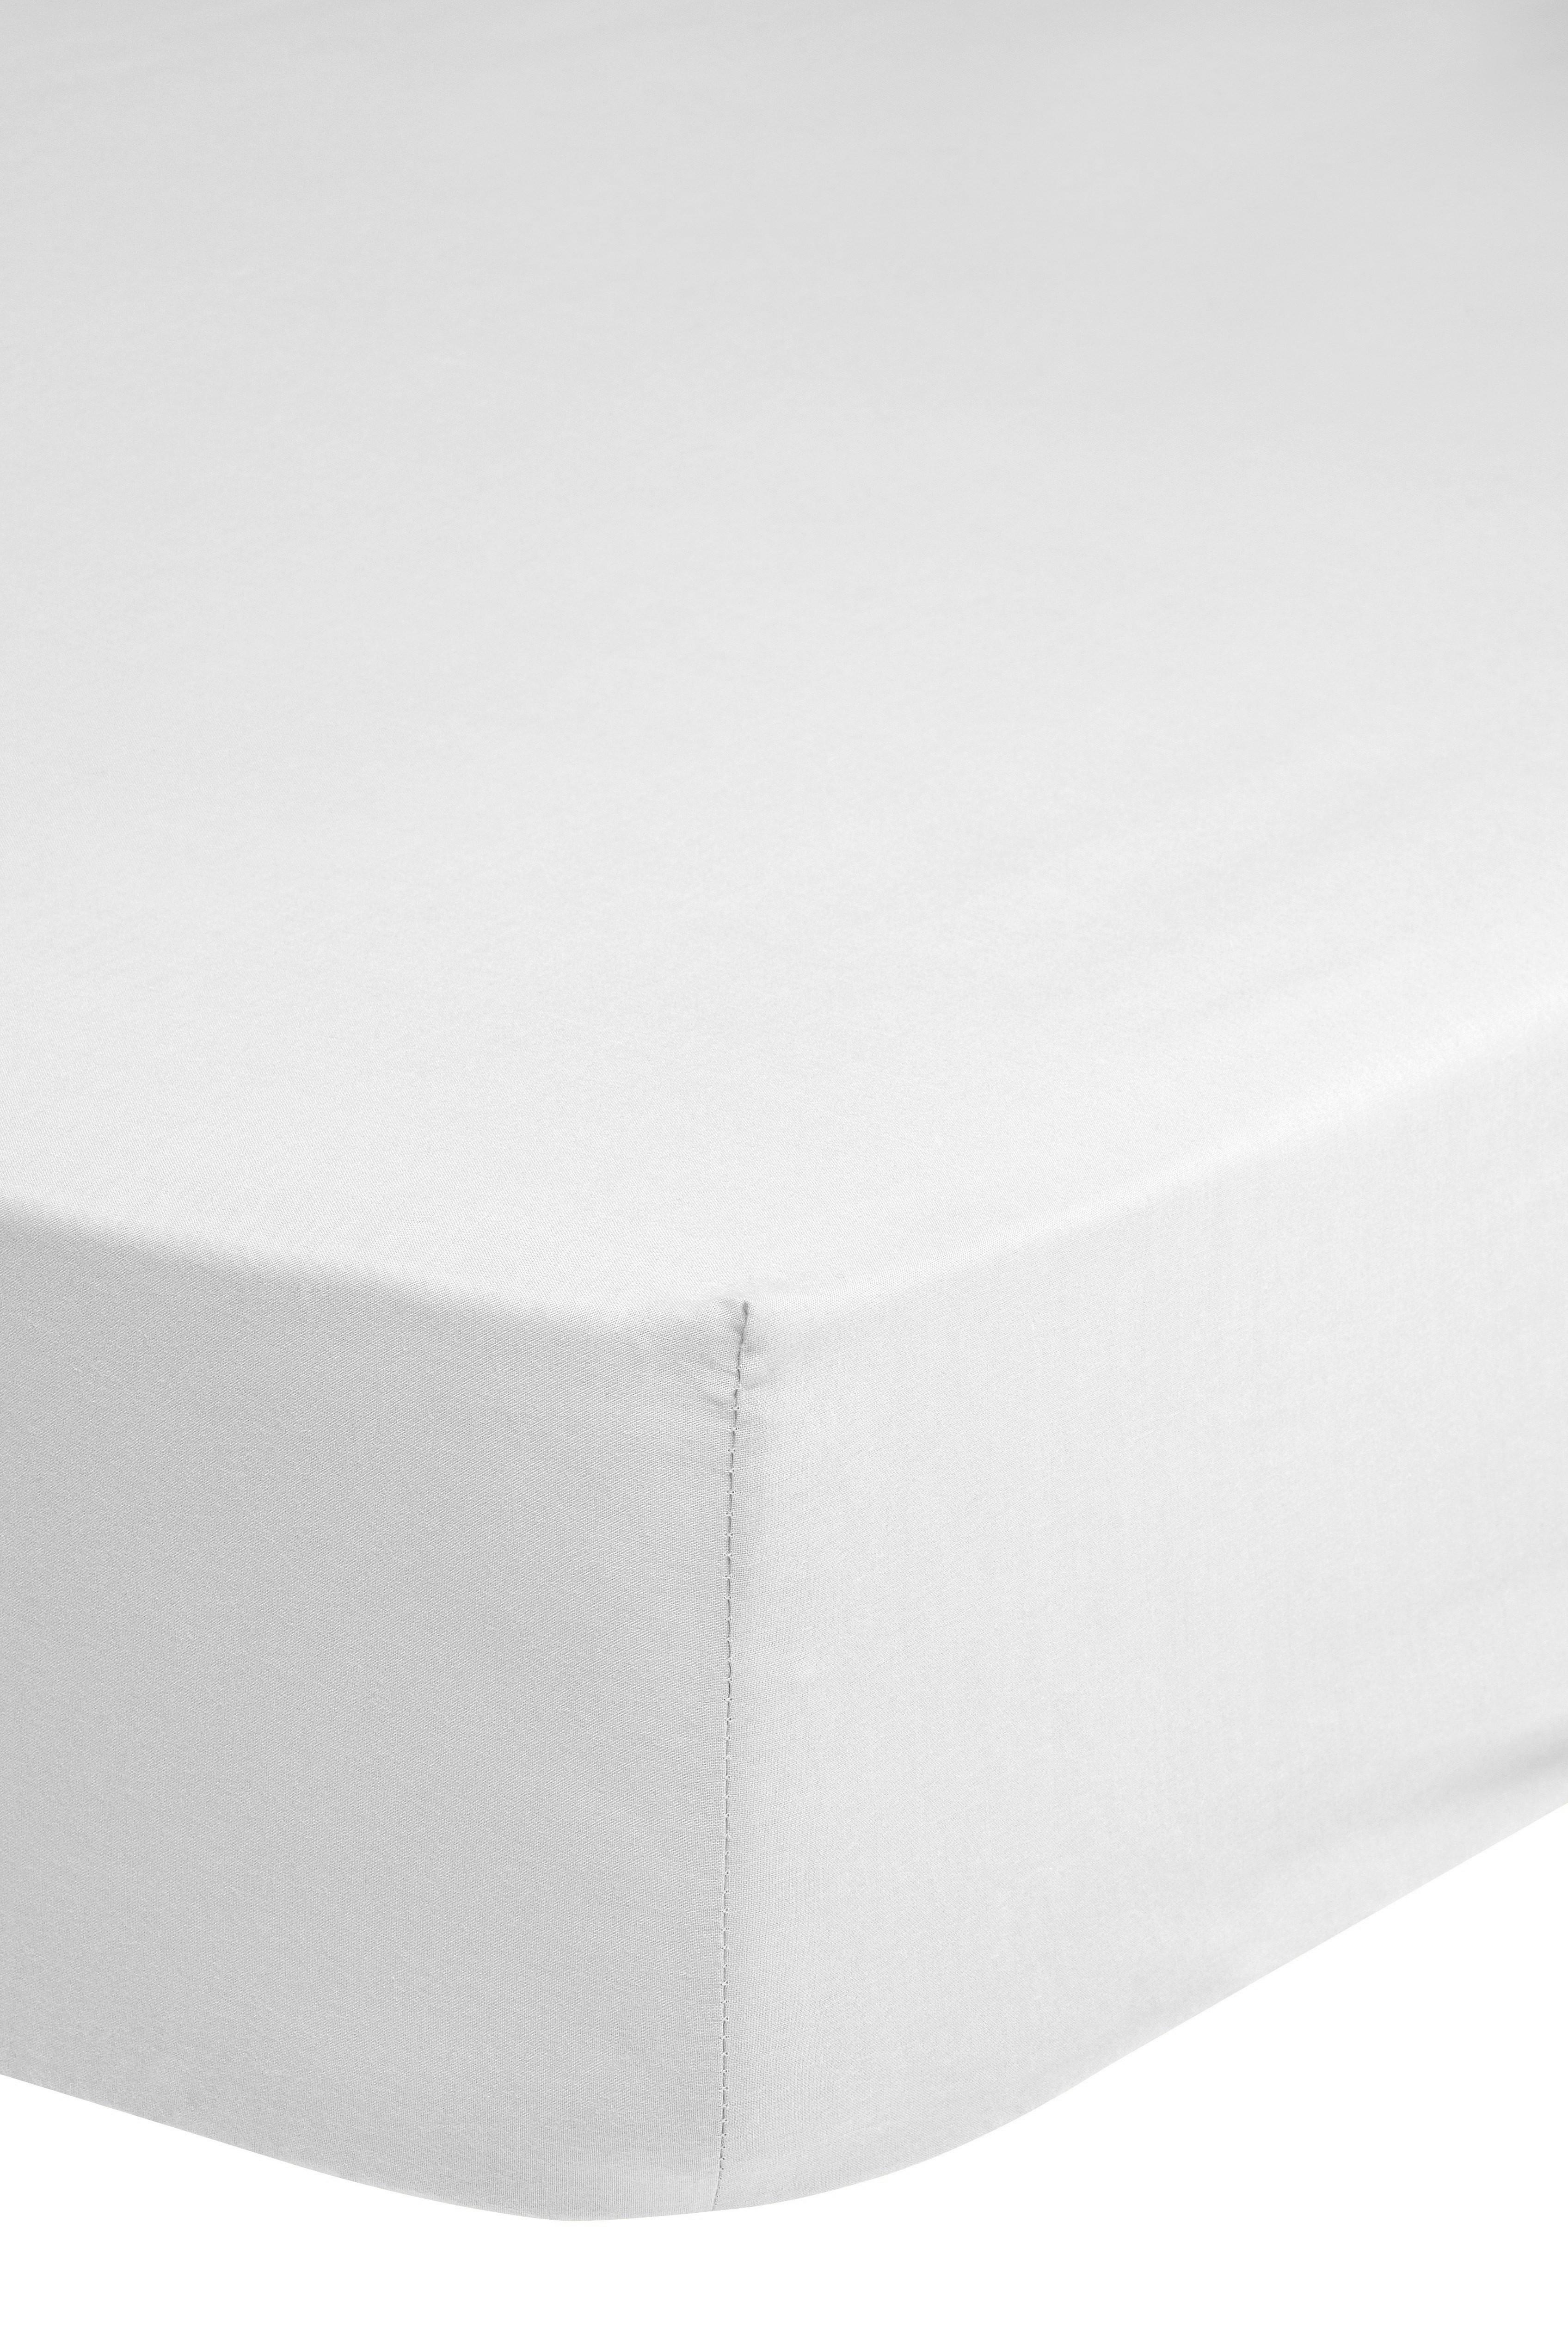 Spannleintuch Satin ca. 140x200cm - Weiß, Basics, Textil (140/200cm)